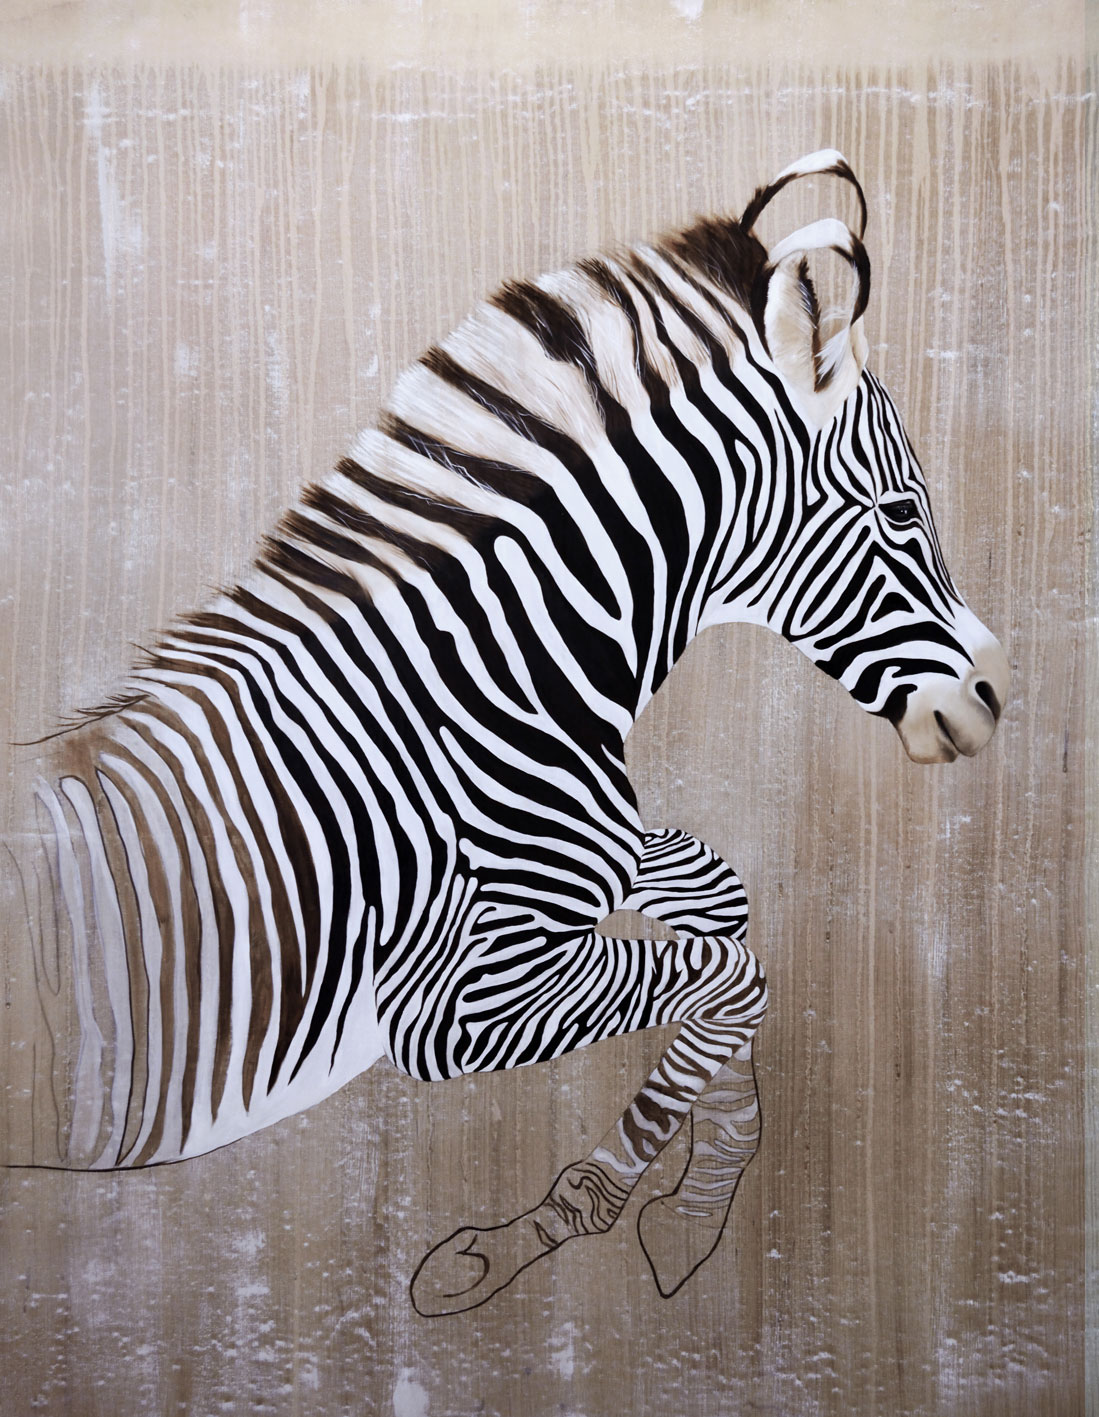 EQUUS GREVYI zebra-grevy`s-threatened-endangered-extinction- Thierry Bisch Contemporary painter animals painting art decoration nature biodiversity conservation